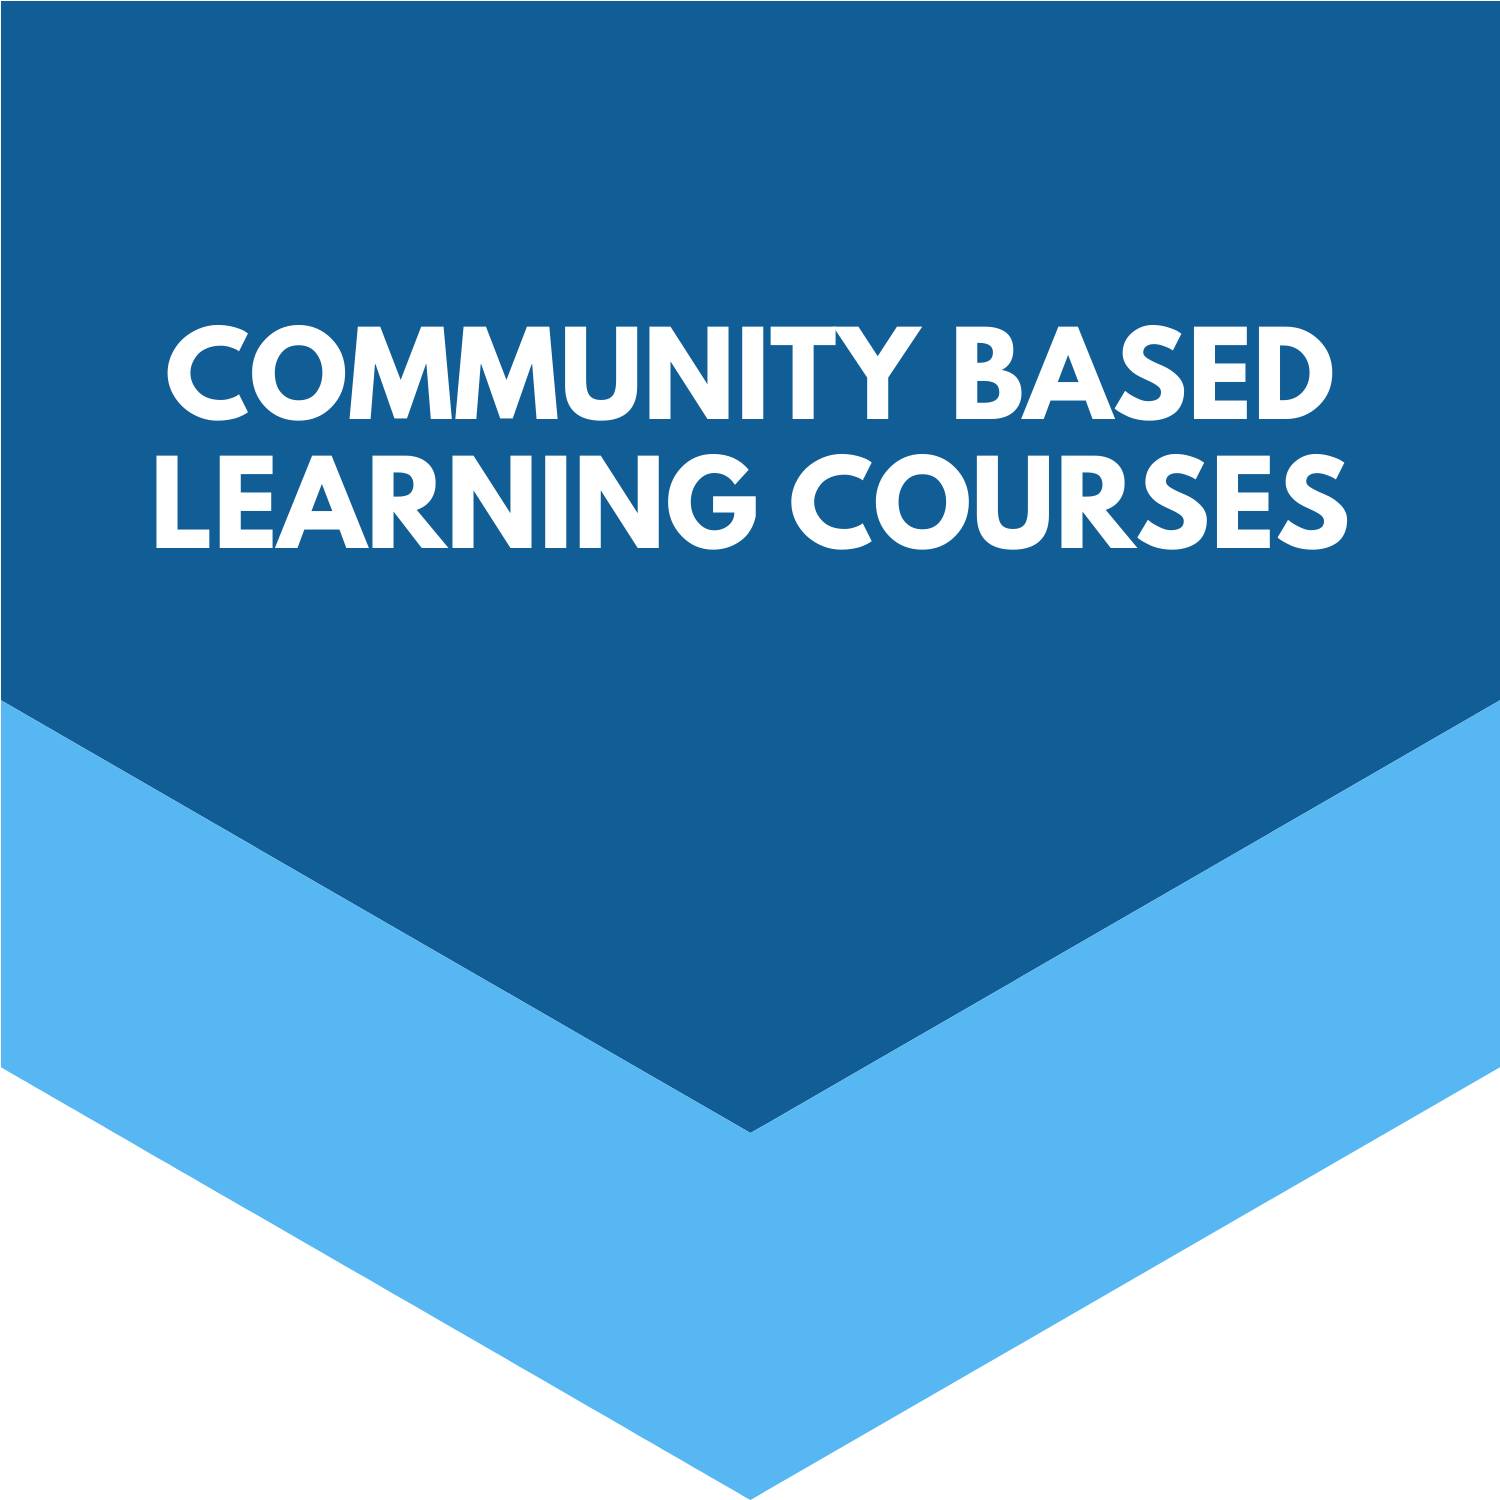 Community Based Learning Courses